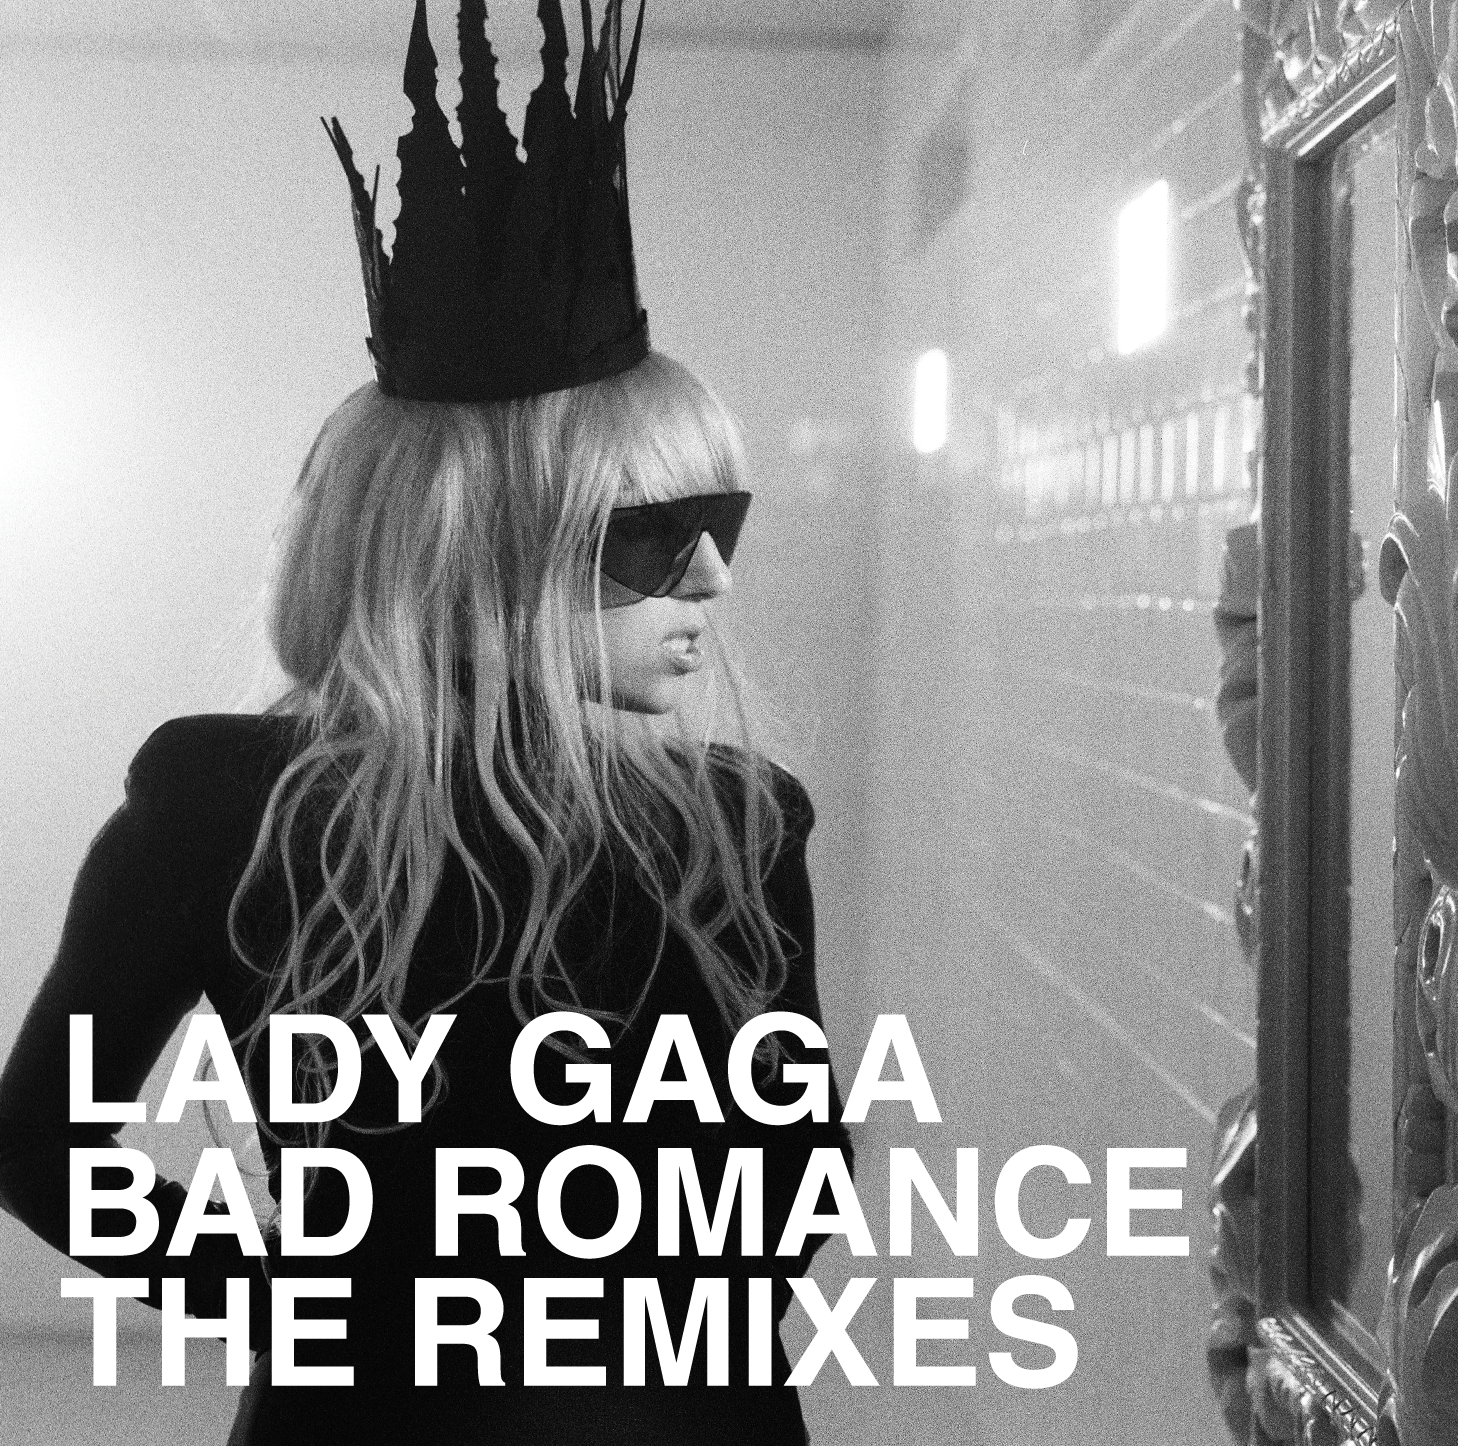 Bad romance remix